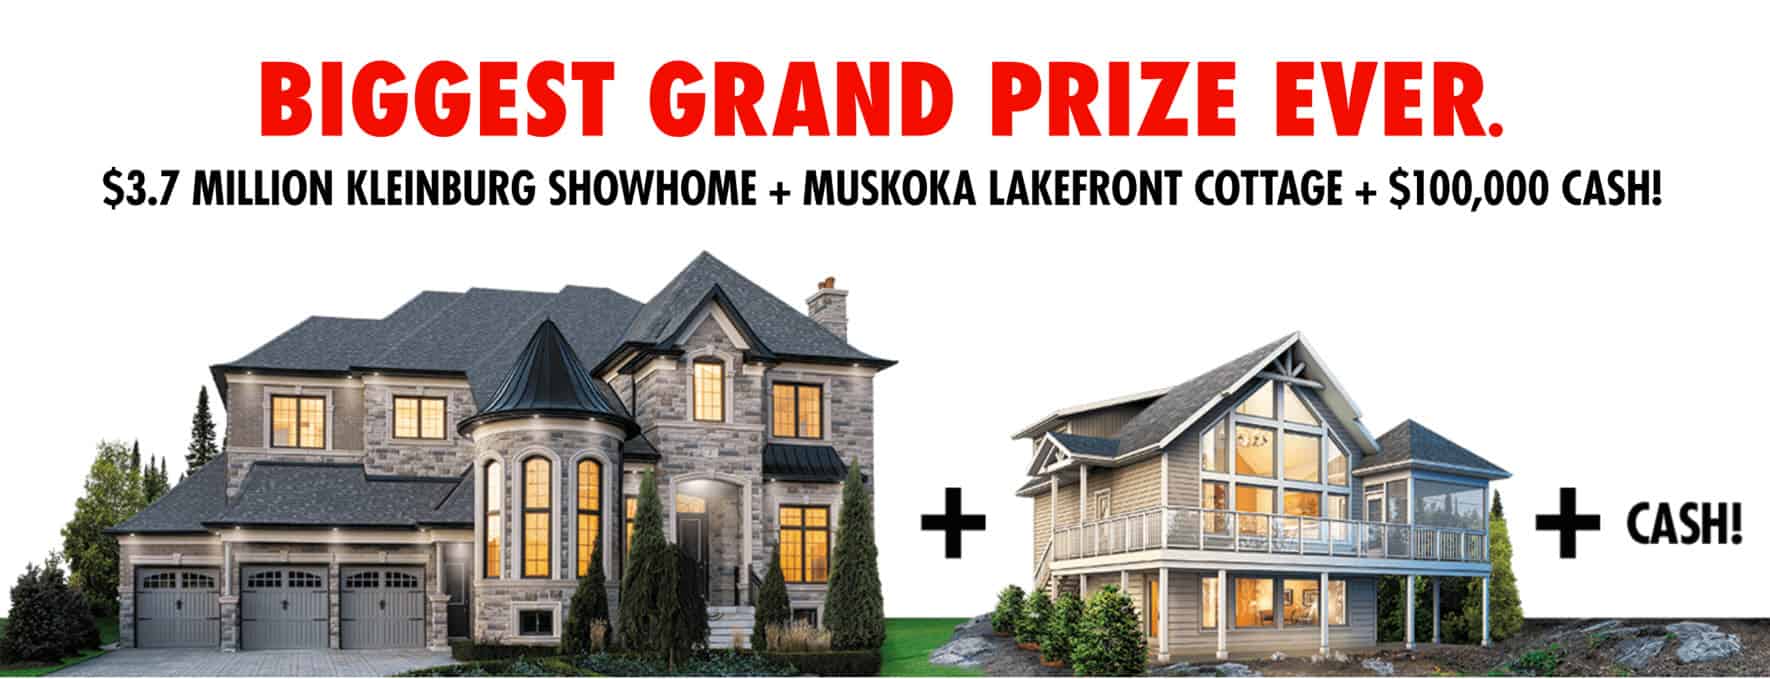 #SupportPrincessMargaret Home Lottery Grand Prize